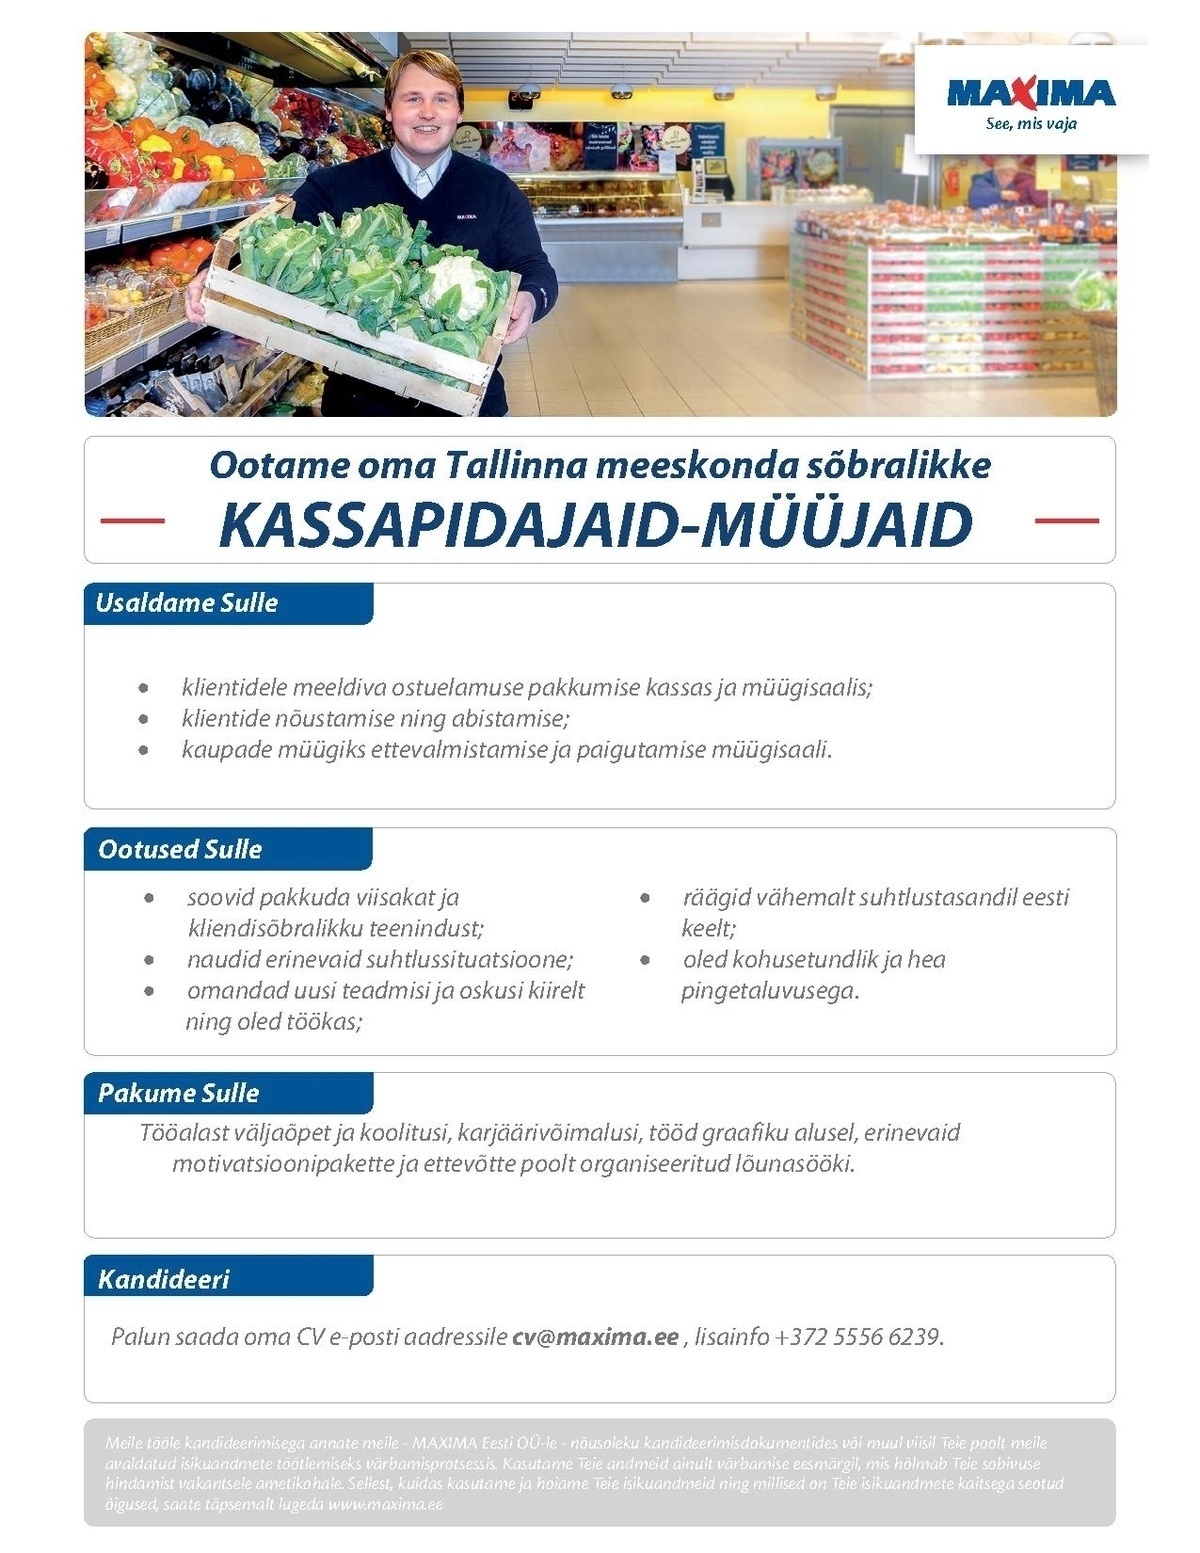 Maxima Eesti OÜ Kassapidaja-müüja Lasnamäe Maximas (Smuuli 9)